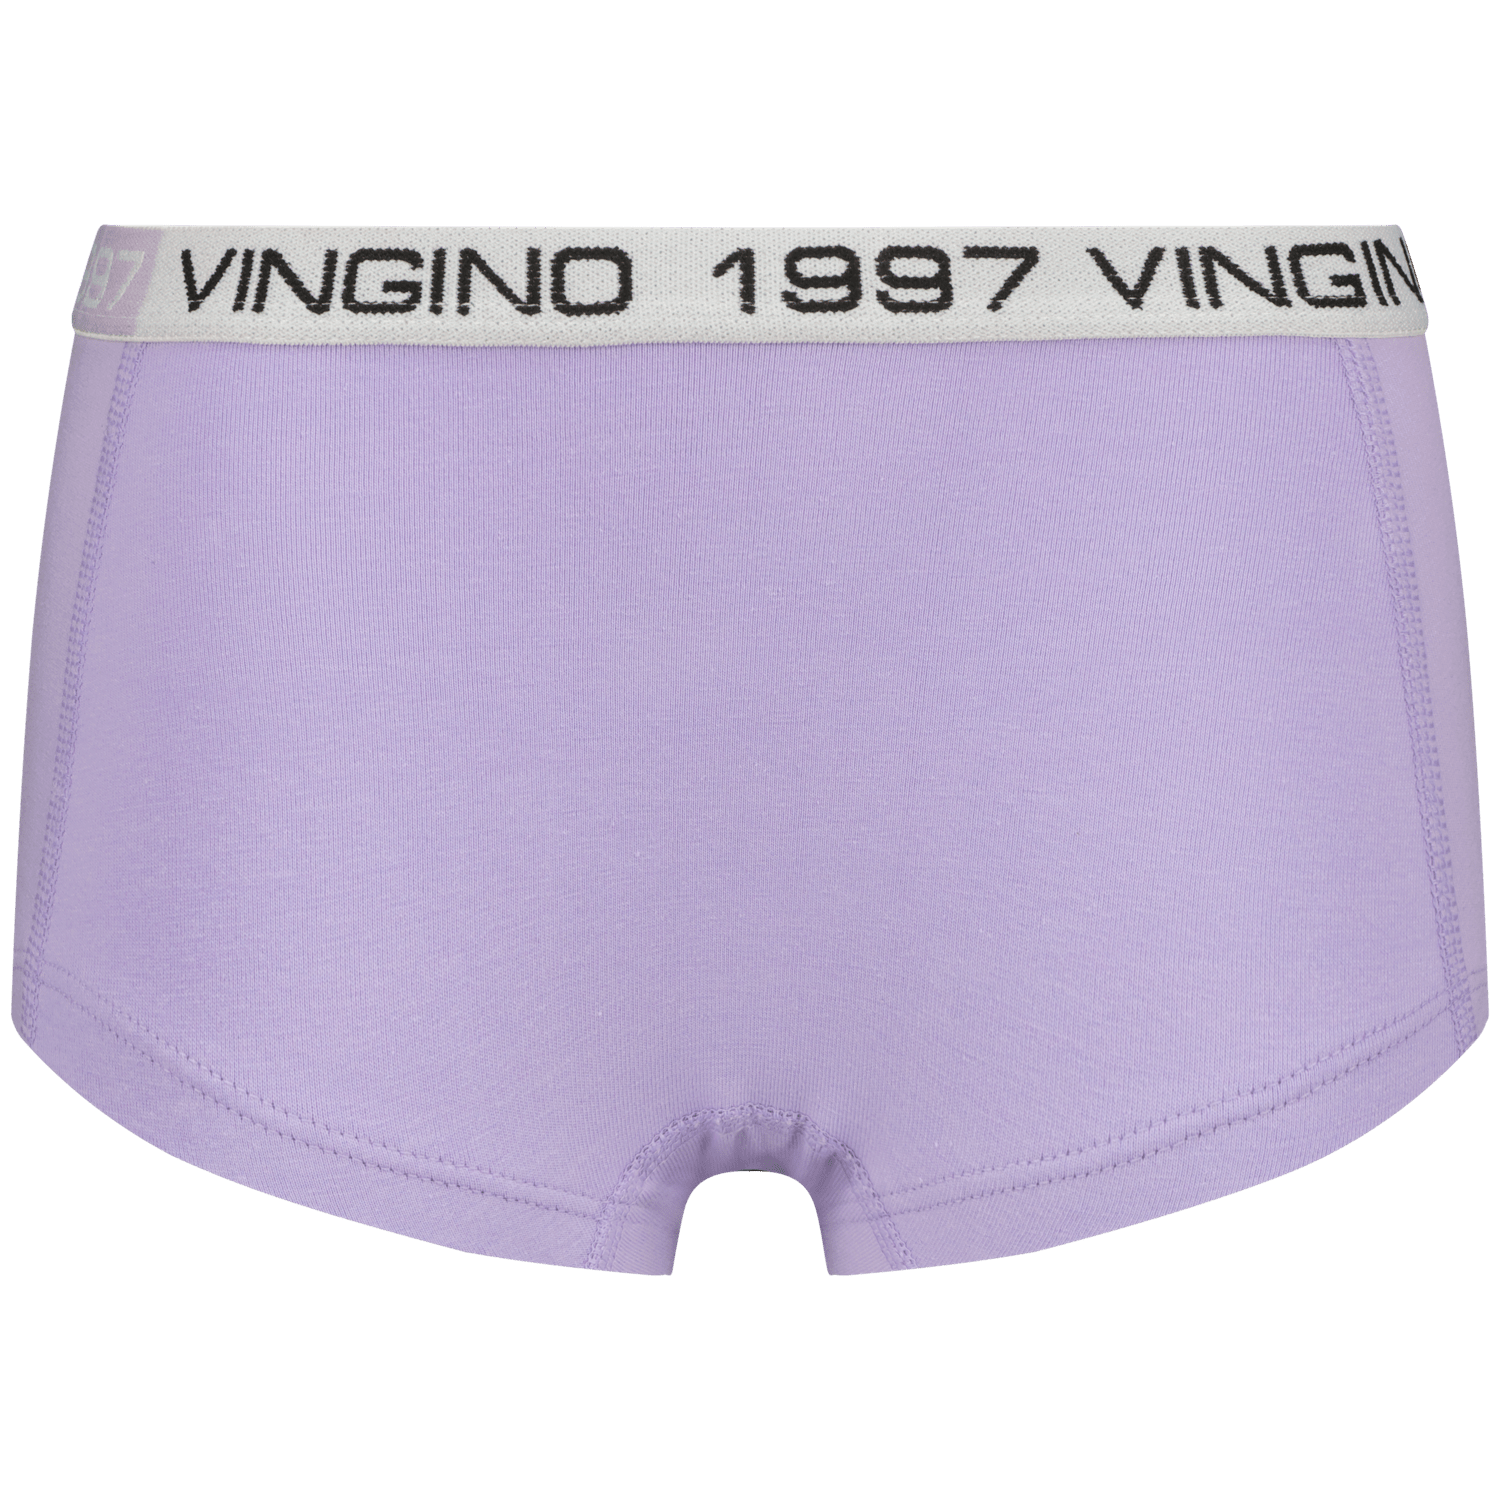 VINGINO Hipster G-so24-3 aztec 3 pack